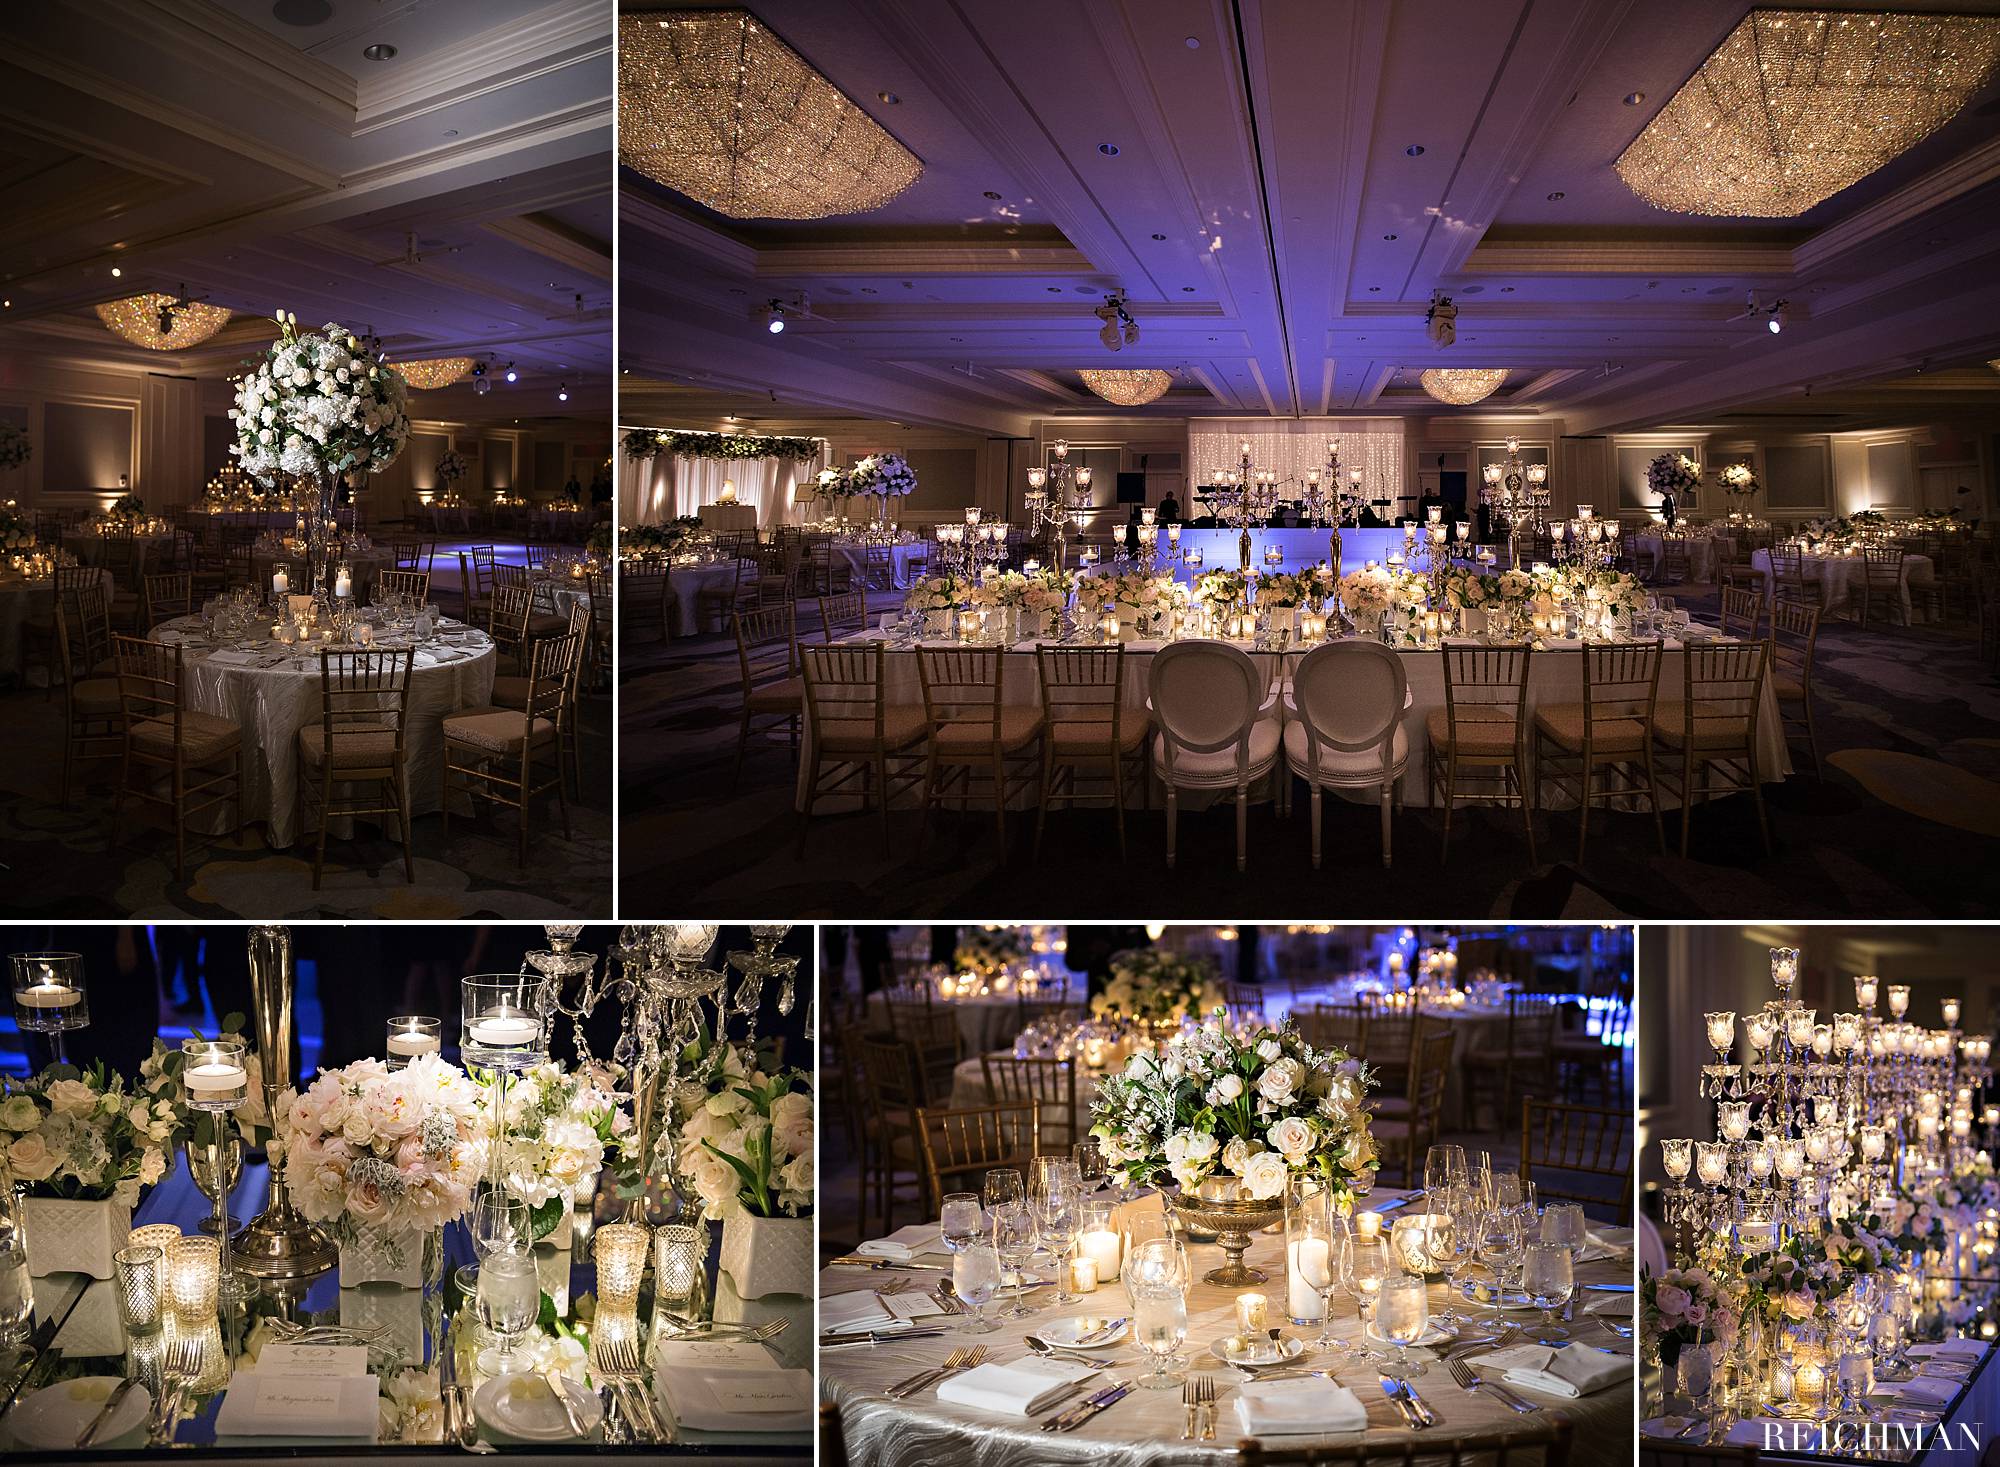 Atlanta Ritz-Carlton Buckhead wedding reception